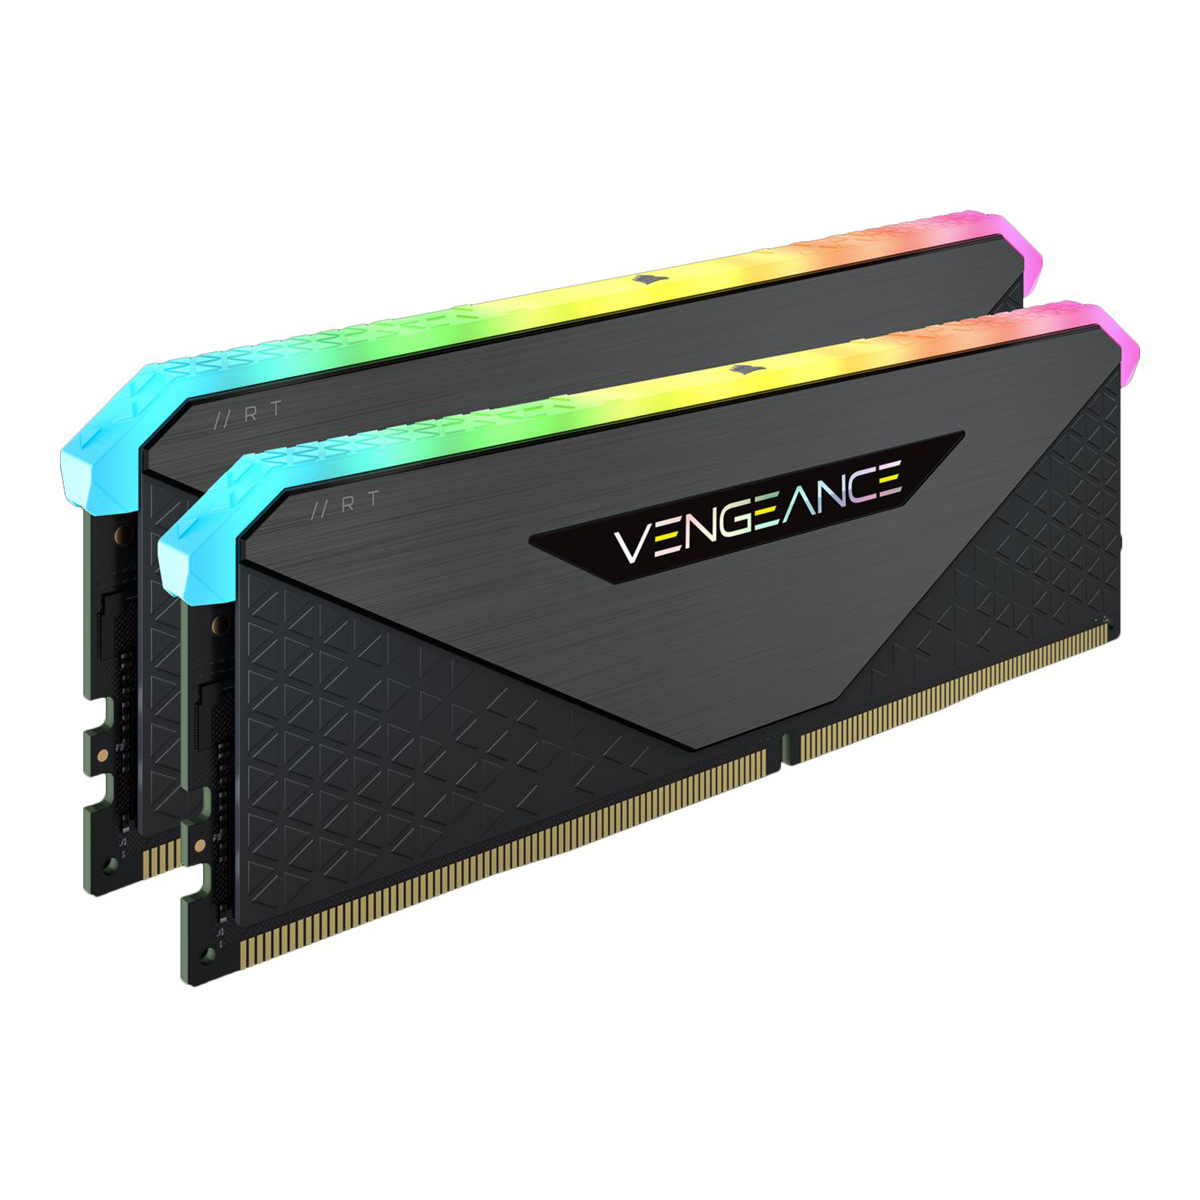 GB Speicher-Kit DDR4 Black 2x16GB, CORSAIR 32 16-20-20-38 1.35V, AMD